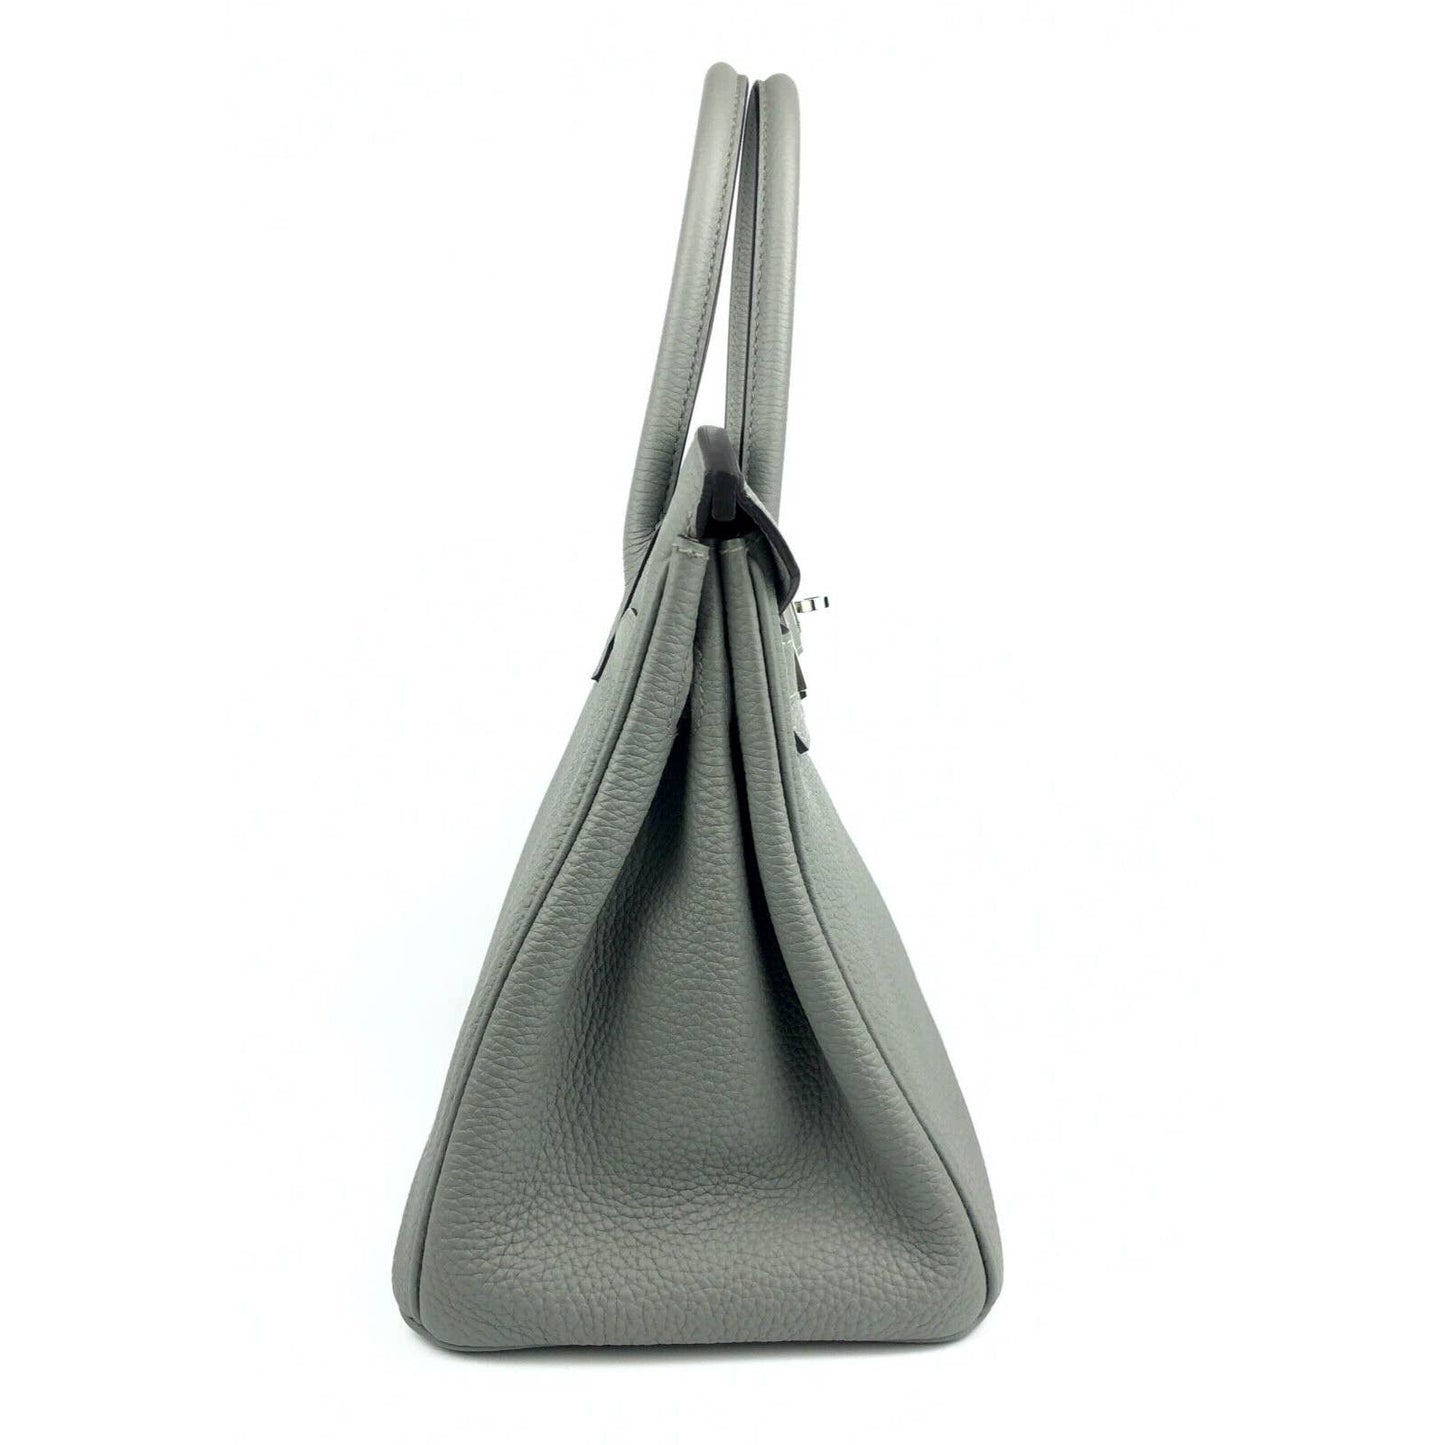 Hermes Birkin 30 Gris Mouette Gray Grey Bag Handbag Palladium Hardware